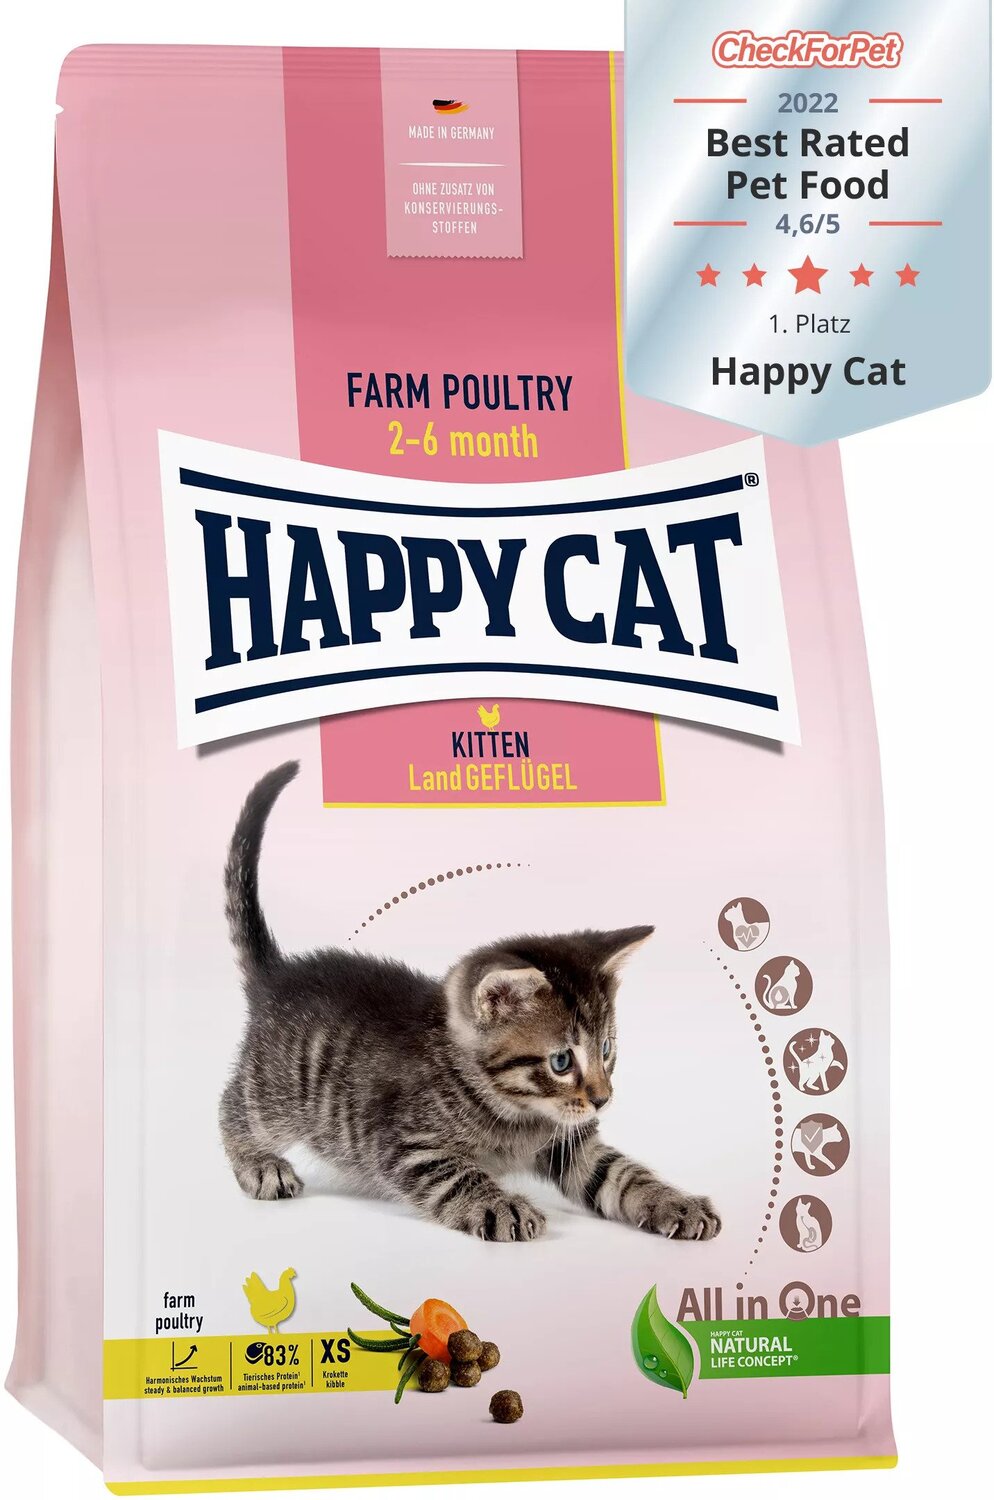 Happy Cat Junior 2-6 month Kitten Farm Poultry Land Geflugel